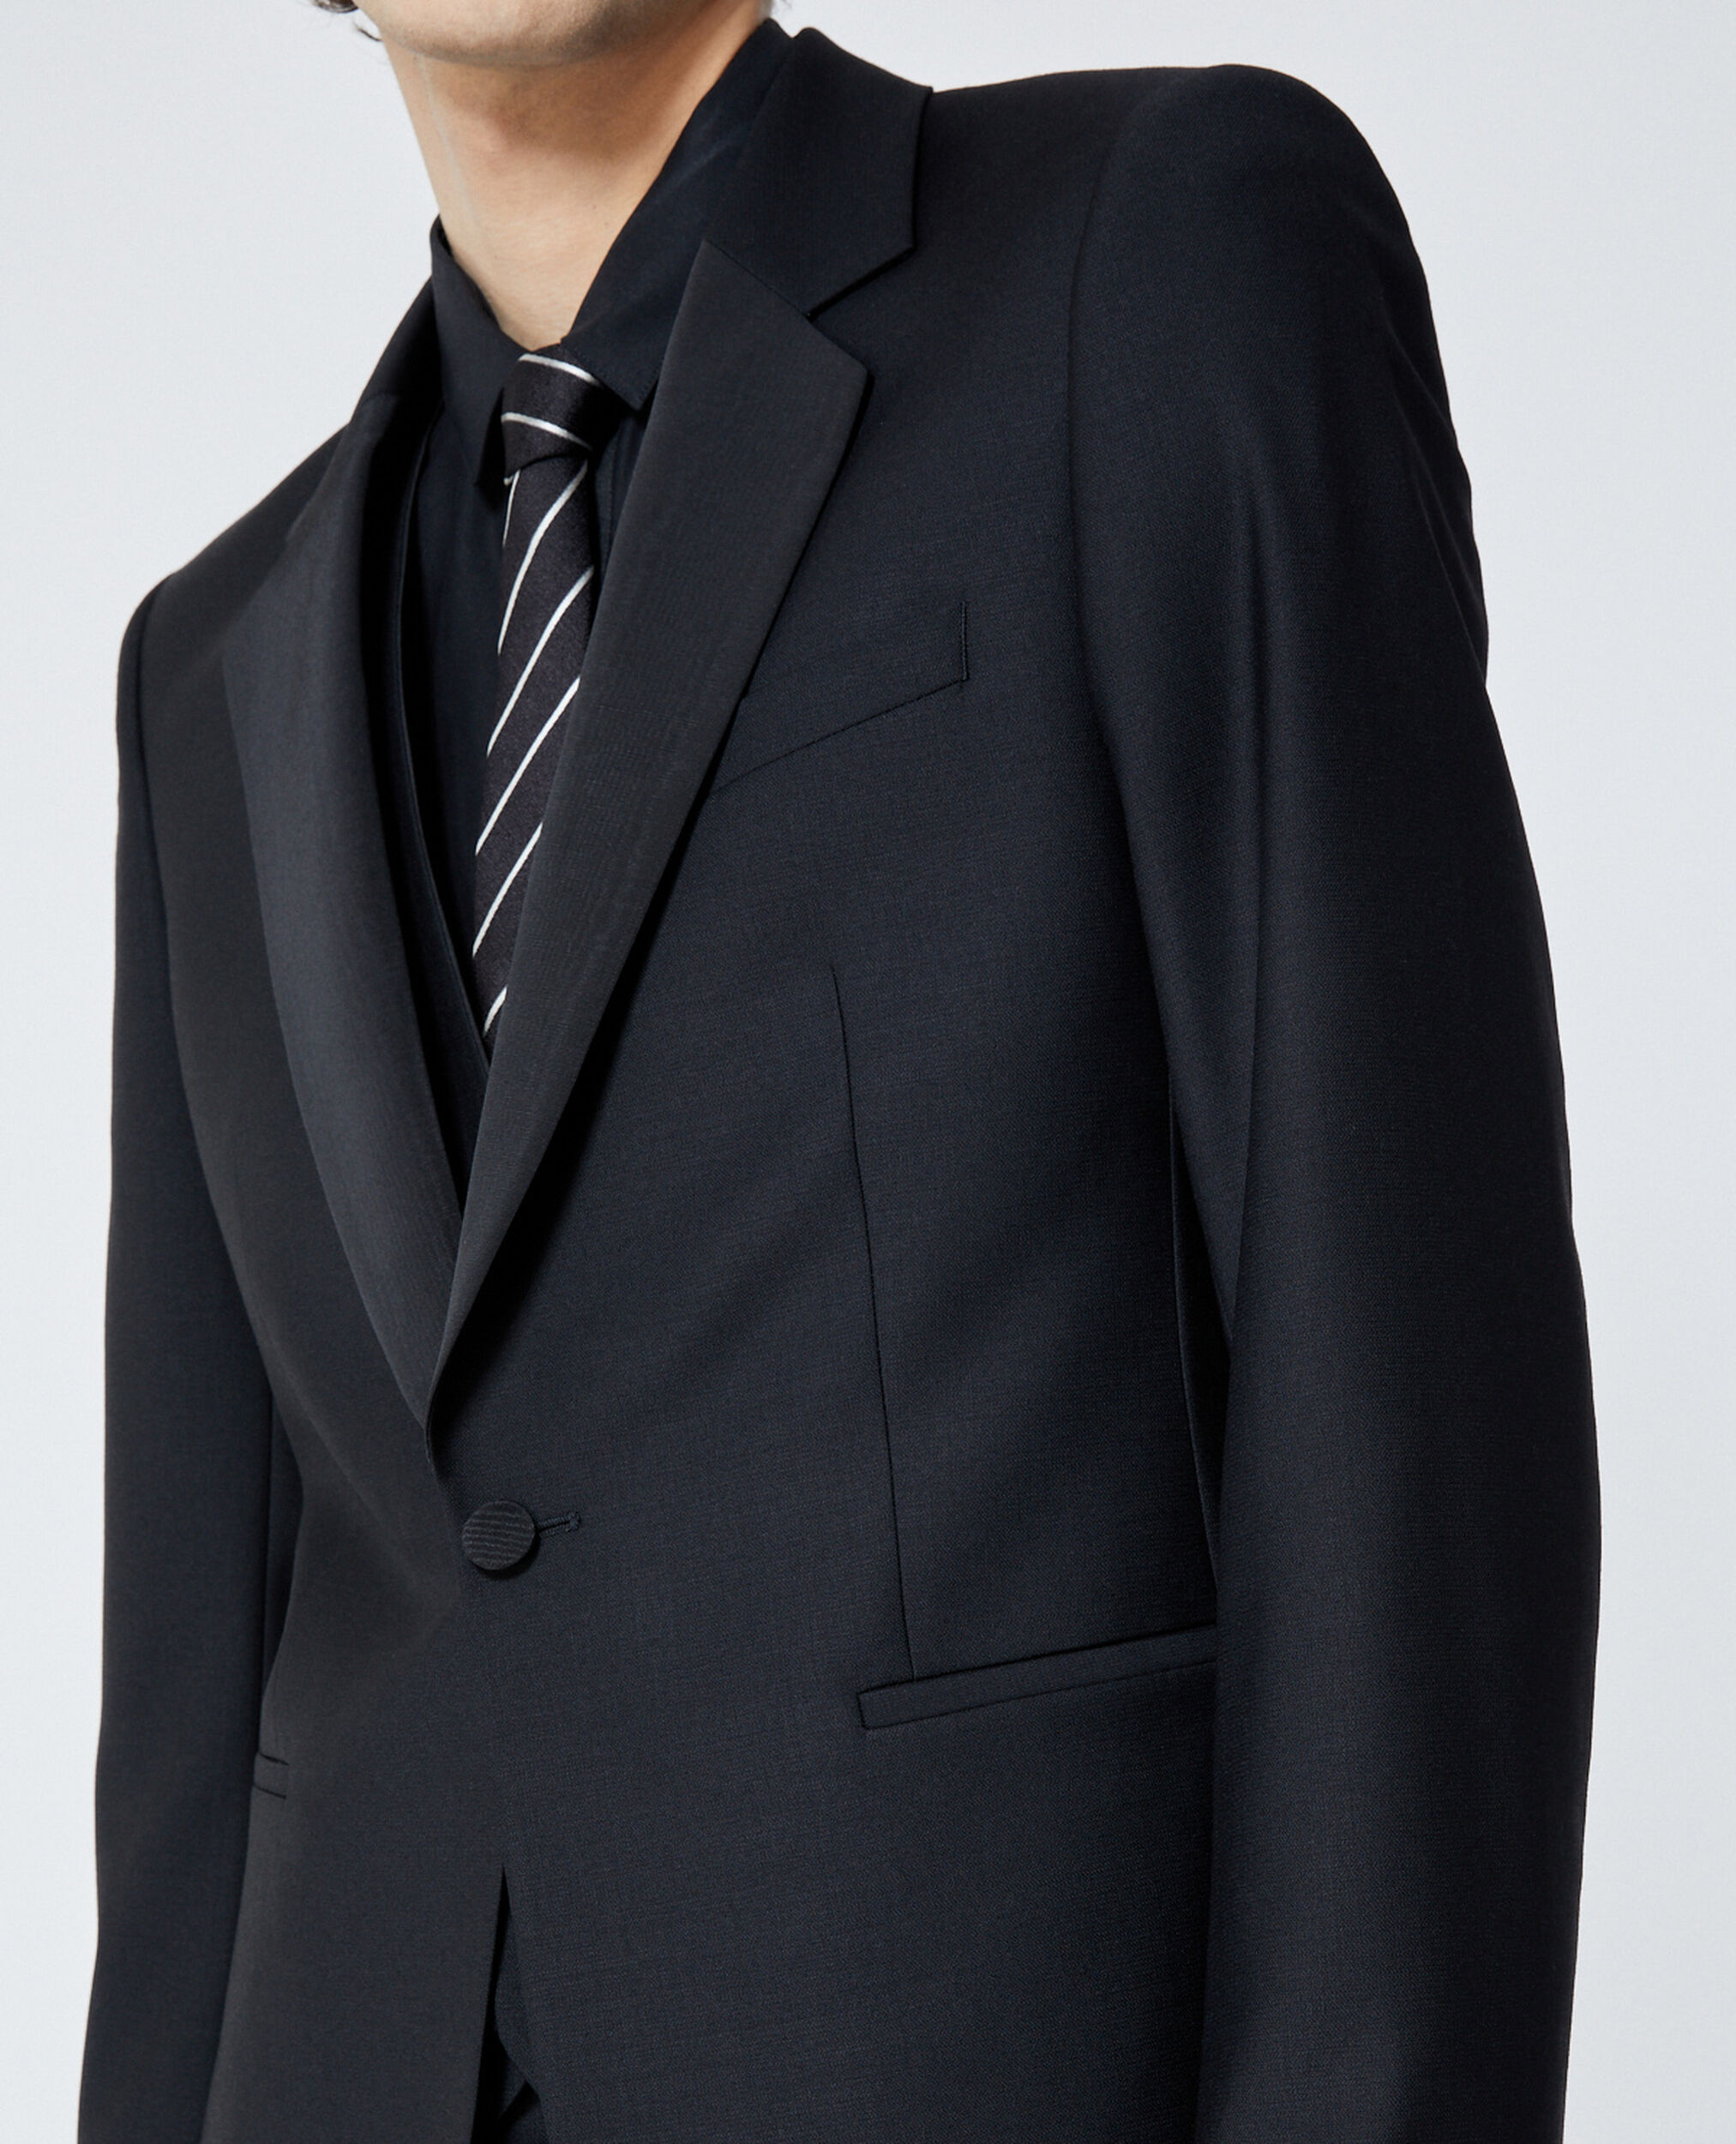 Fitted black dinner jacket in wool, BLACK, hi-res image number null